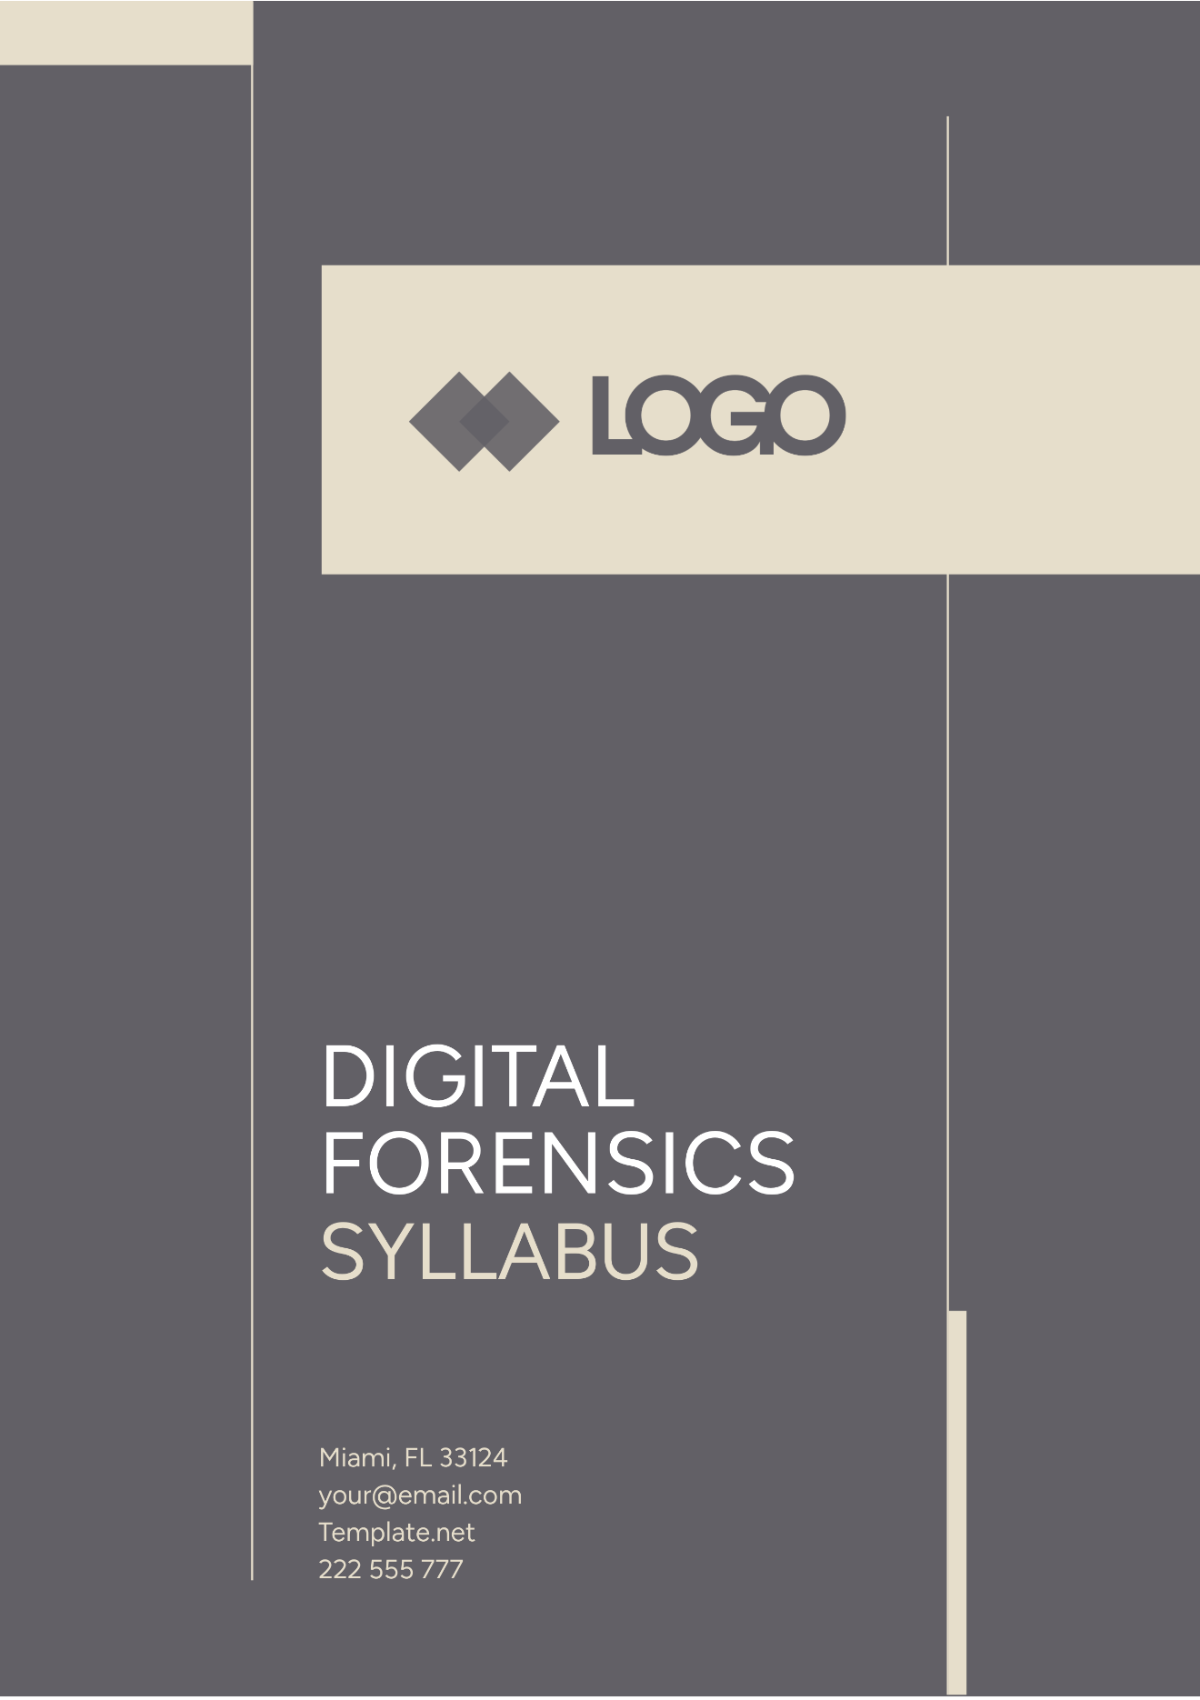 Digital Forensics Syllabus Template